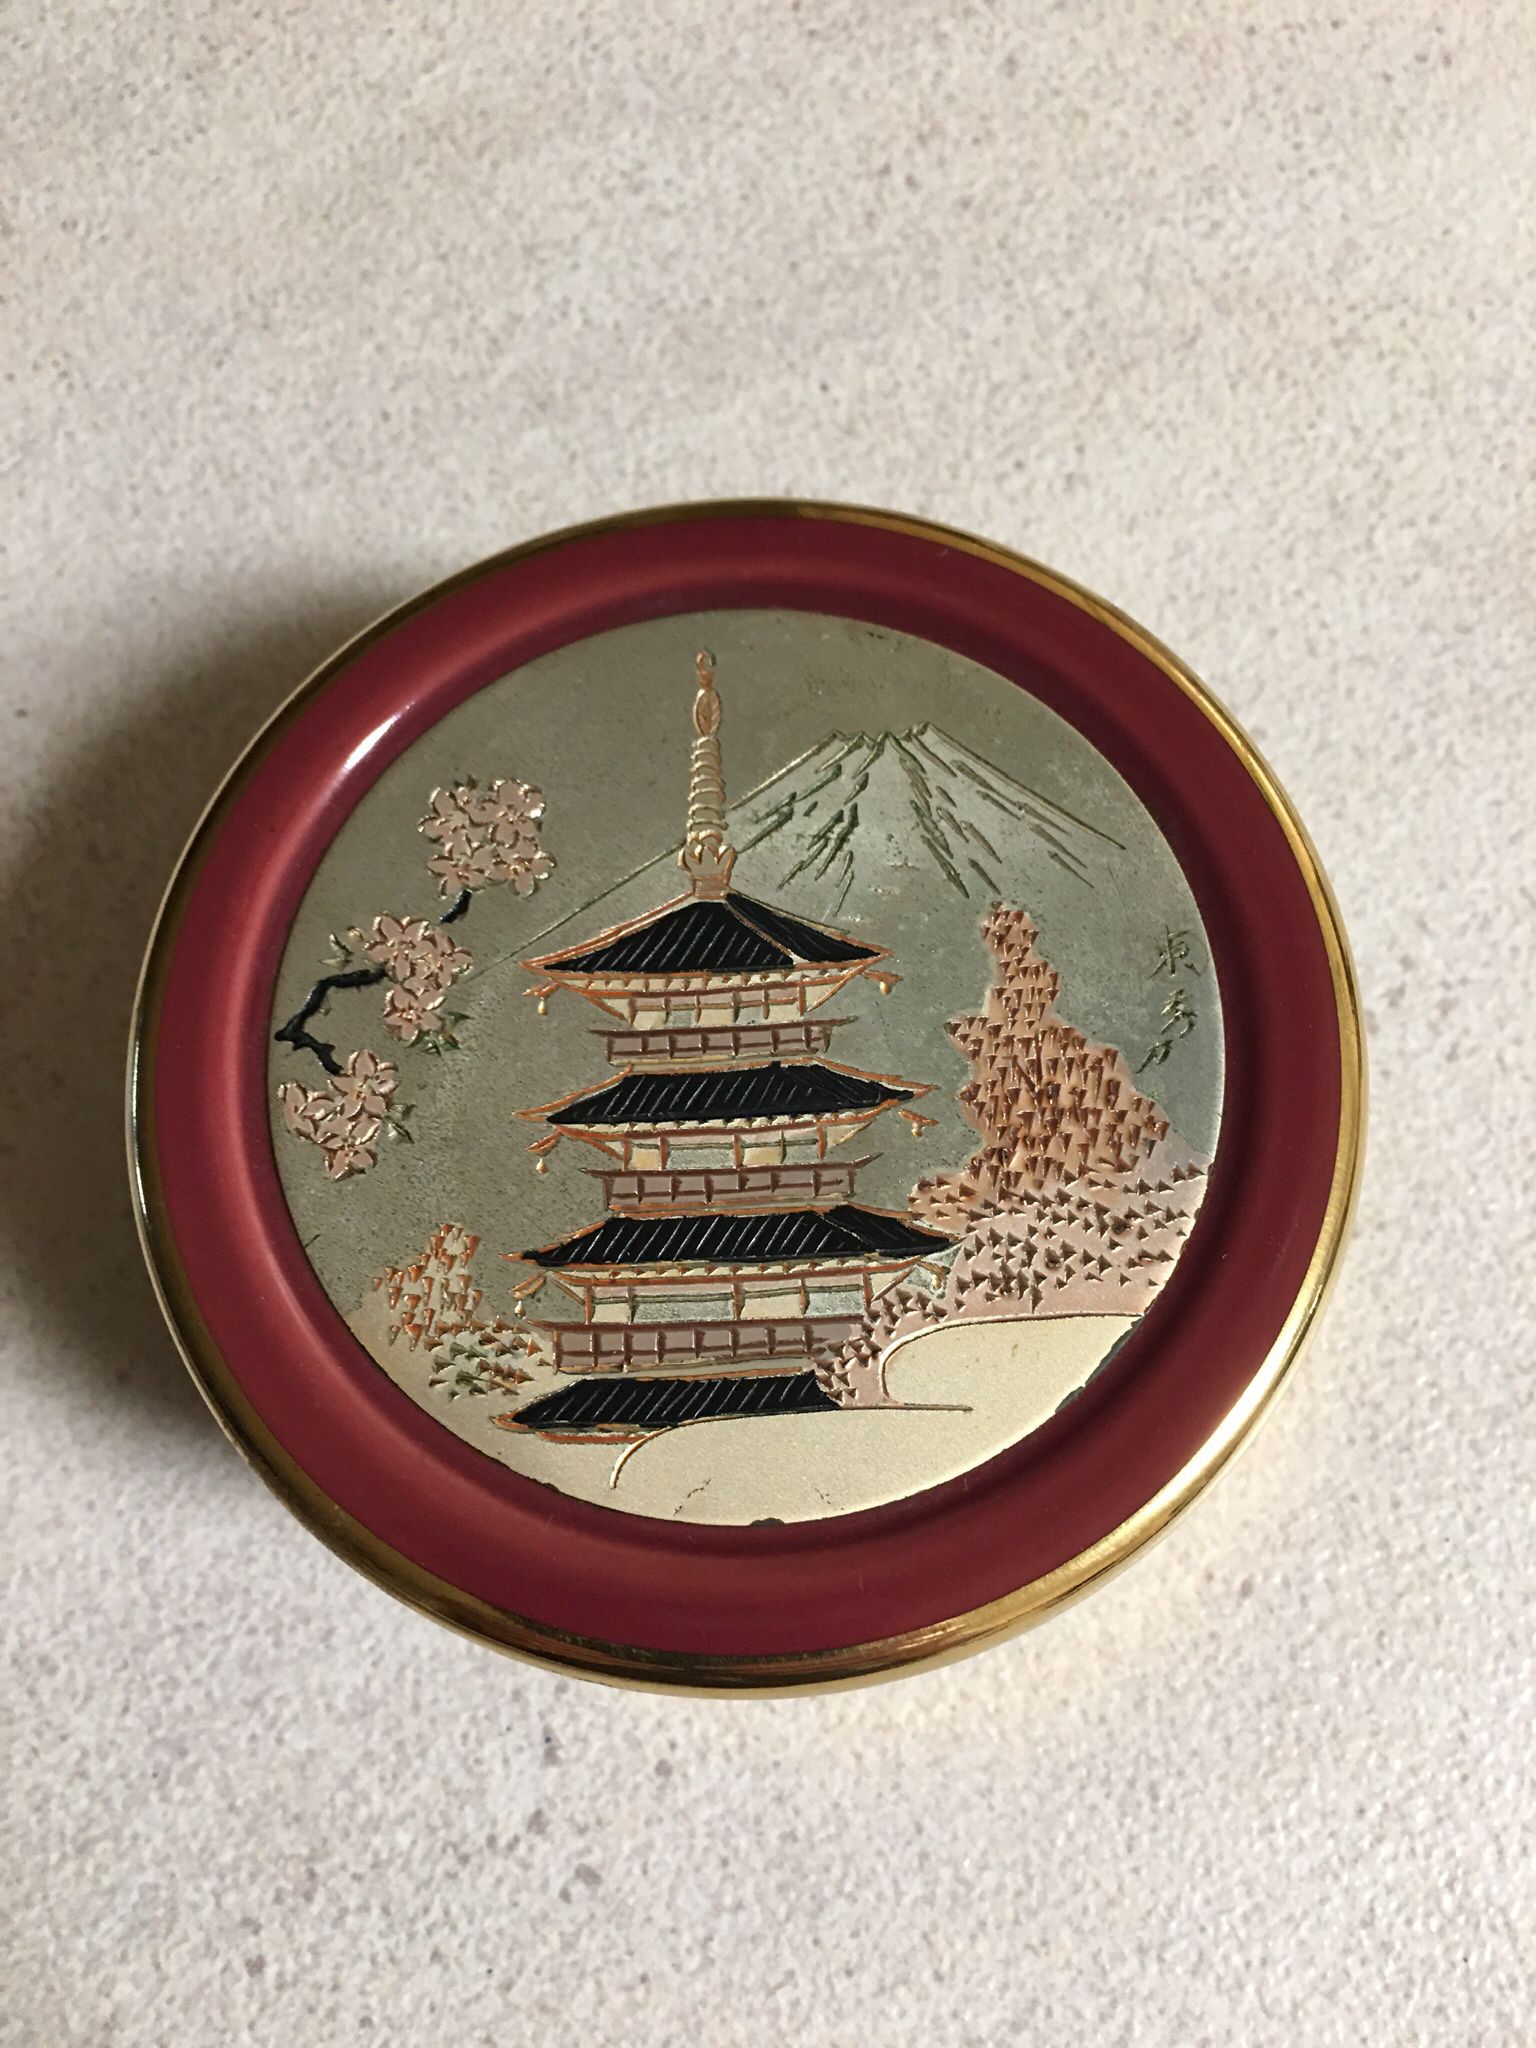 24 Karat Gold Trimmed Chokin Box From Japan